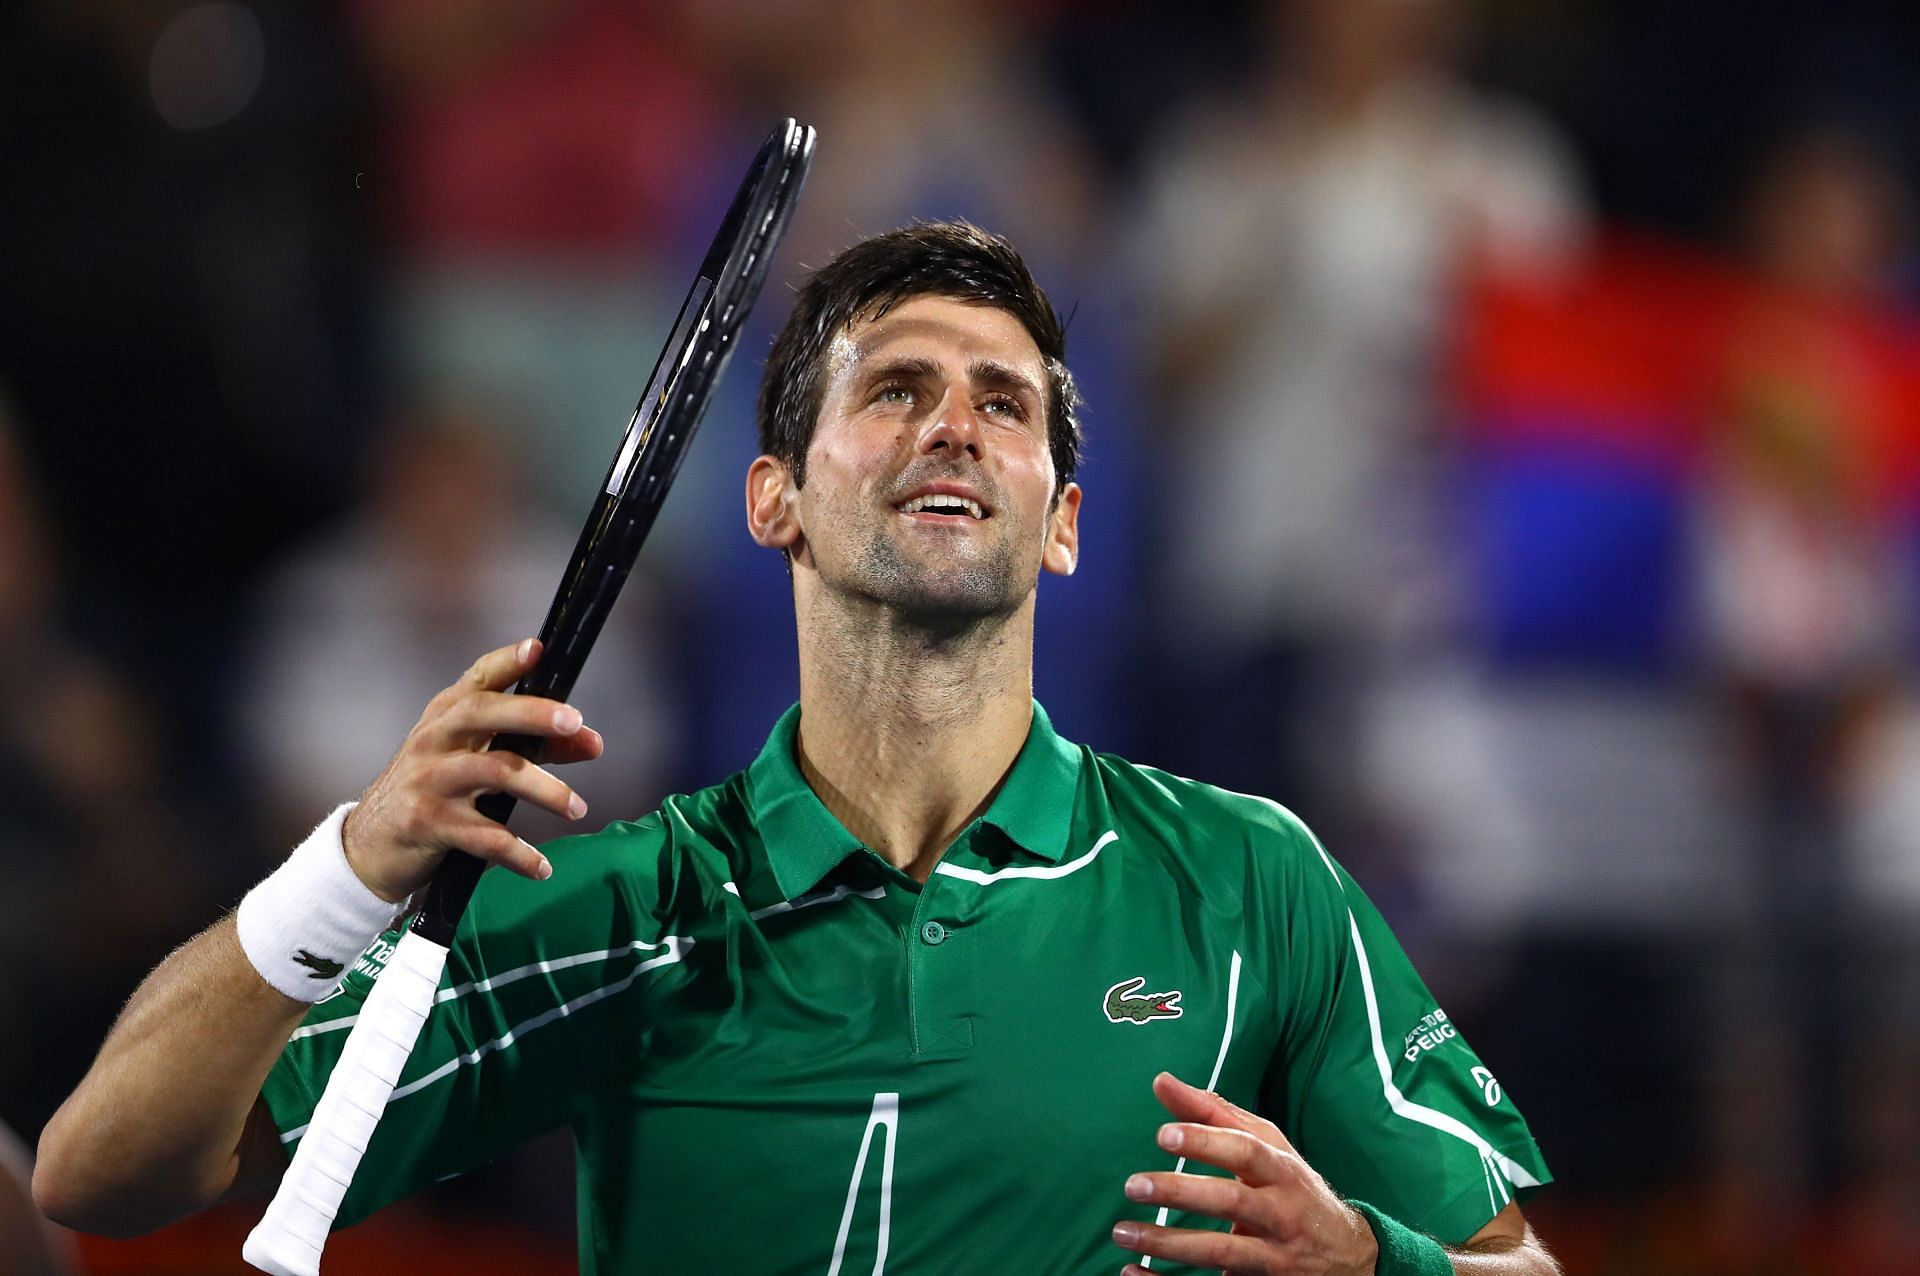 Novak Djokovic has won the Dubai Tennis Championship five times till date